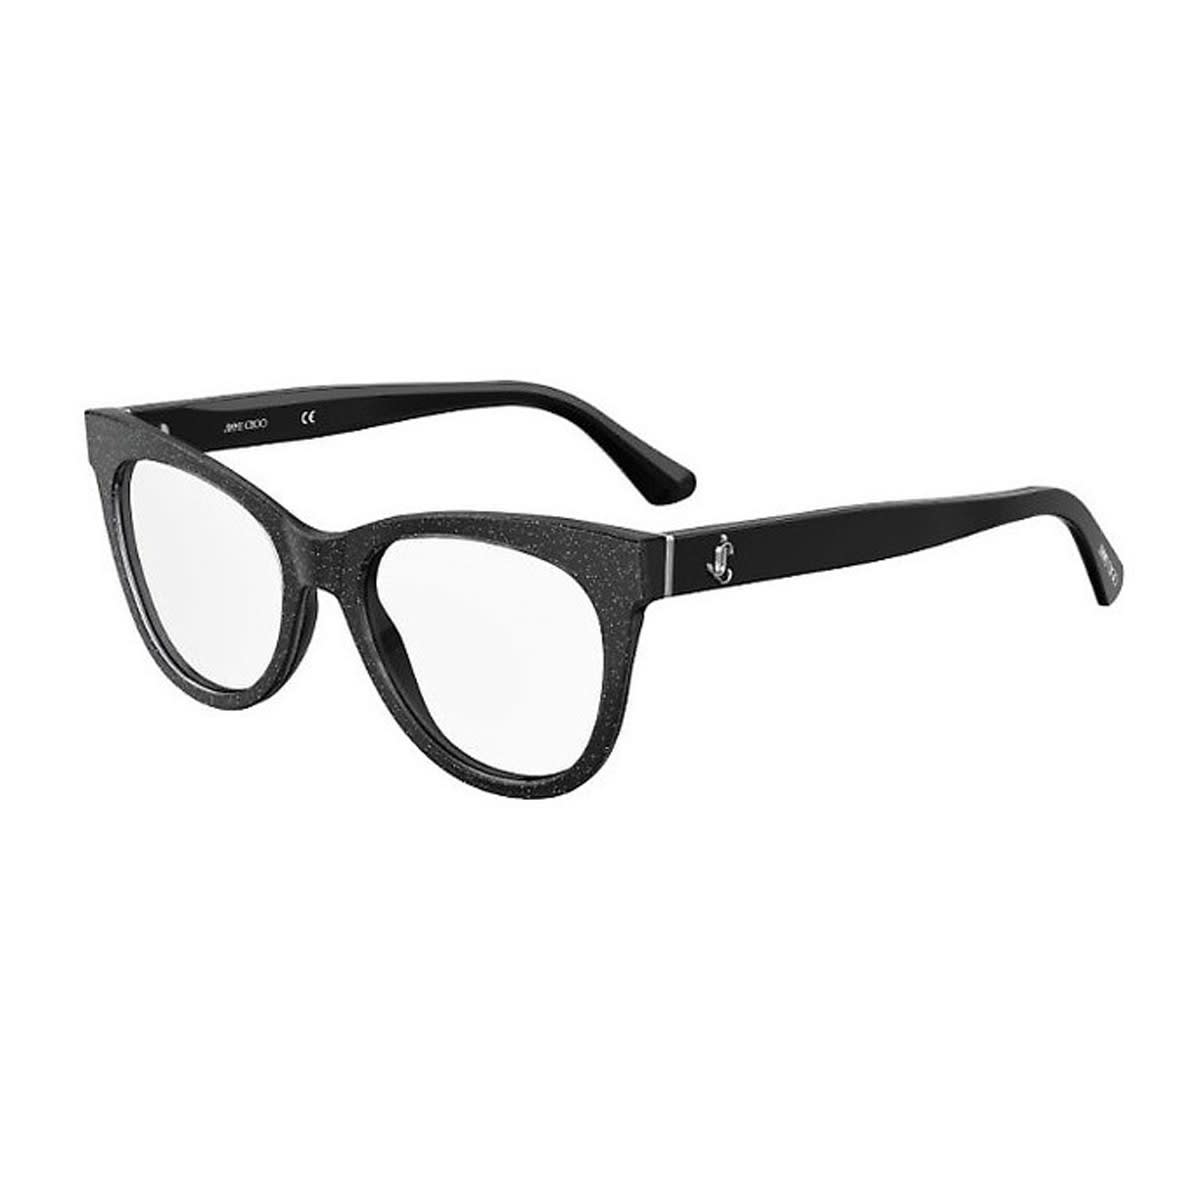 Jimmy Choo Eyewear Jc276 Glasses